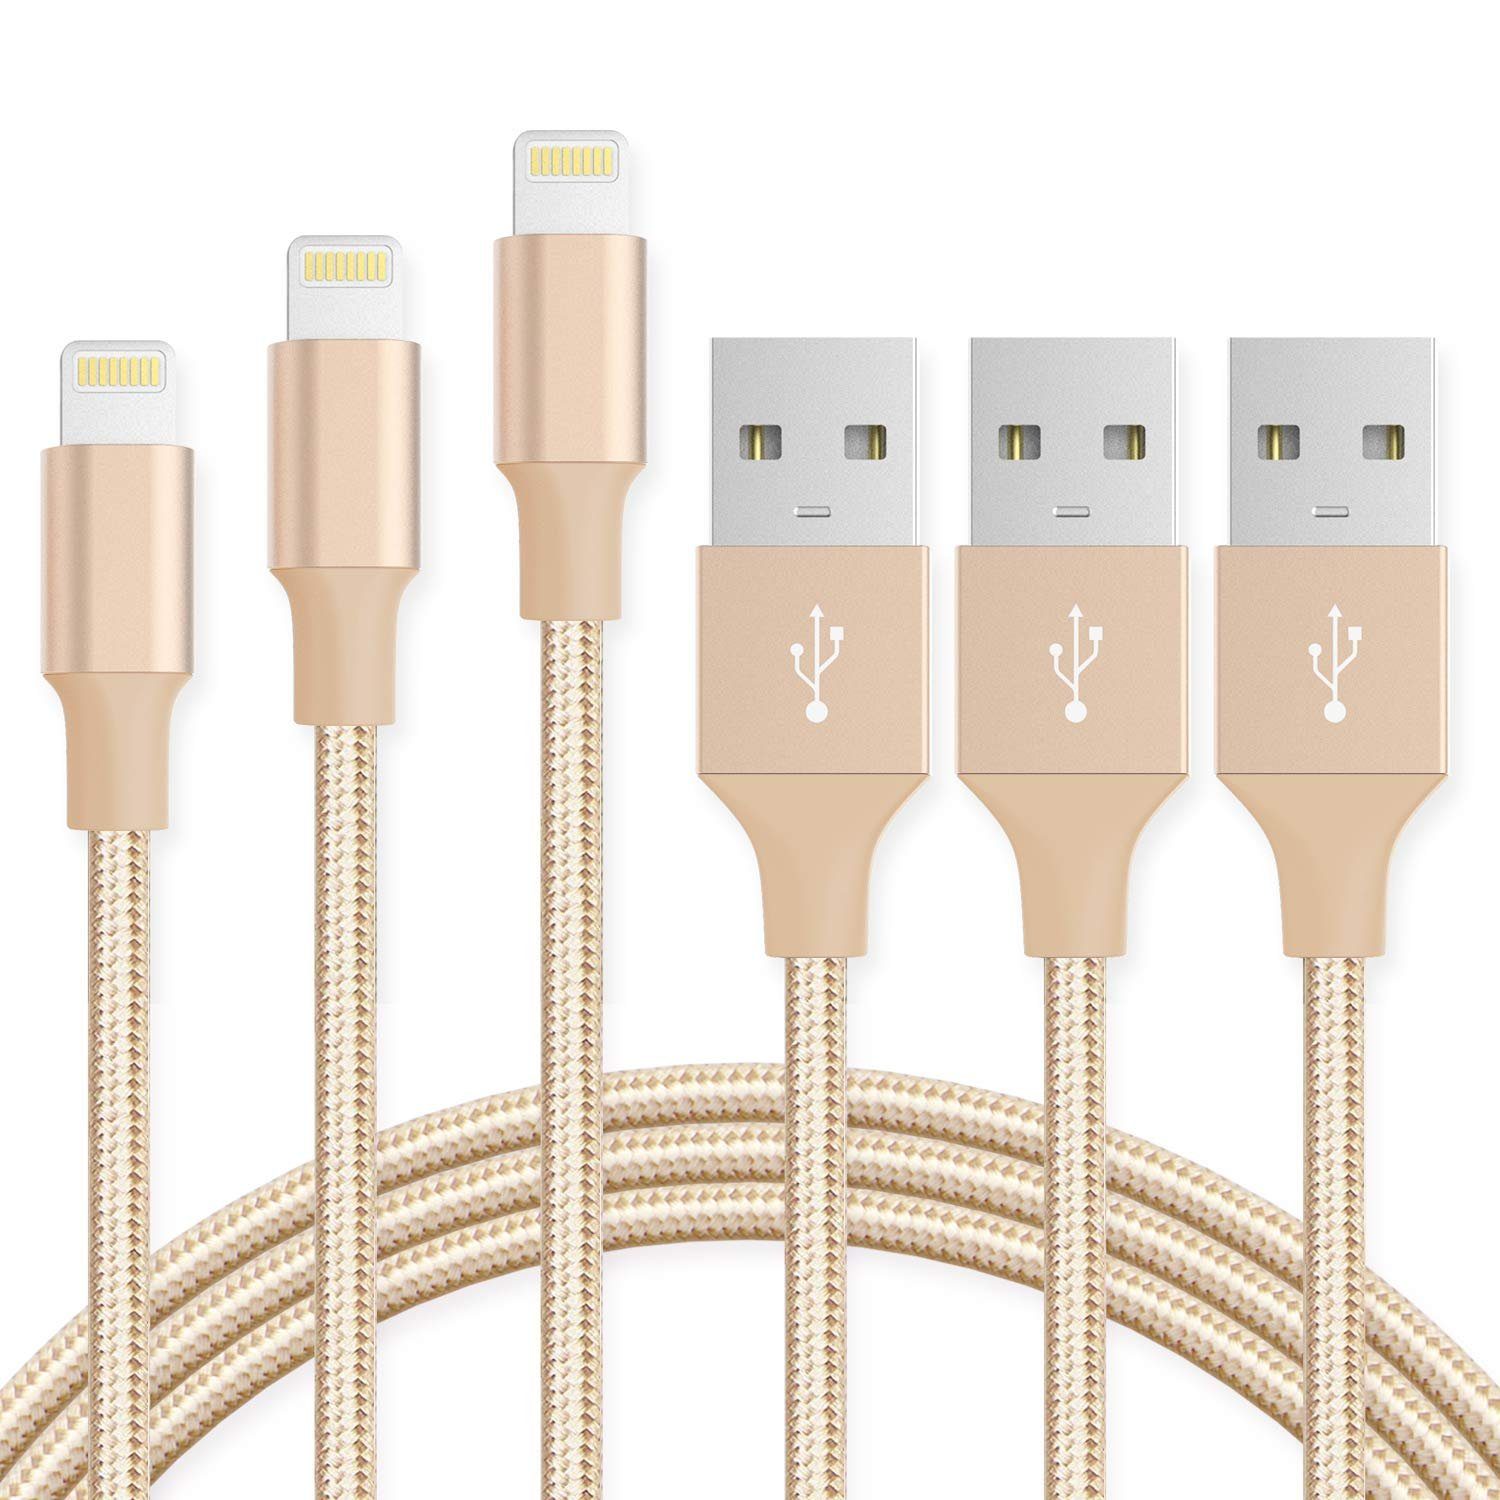 Elegear »3 Pack iPhone Ladekabel, [MFi Zertifiziert] Lightning Kabel«  Lightningkabel, 1M + 2M +3M iPhone Kabel online kaufen | OTTO